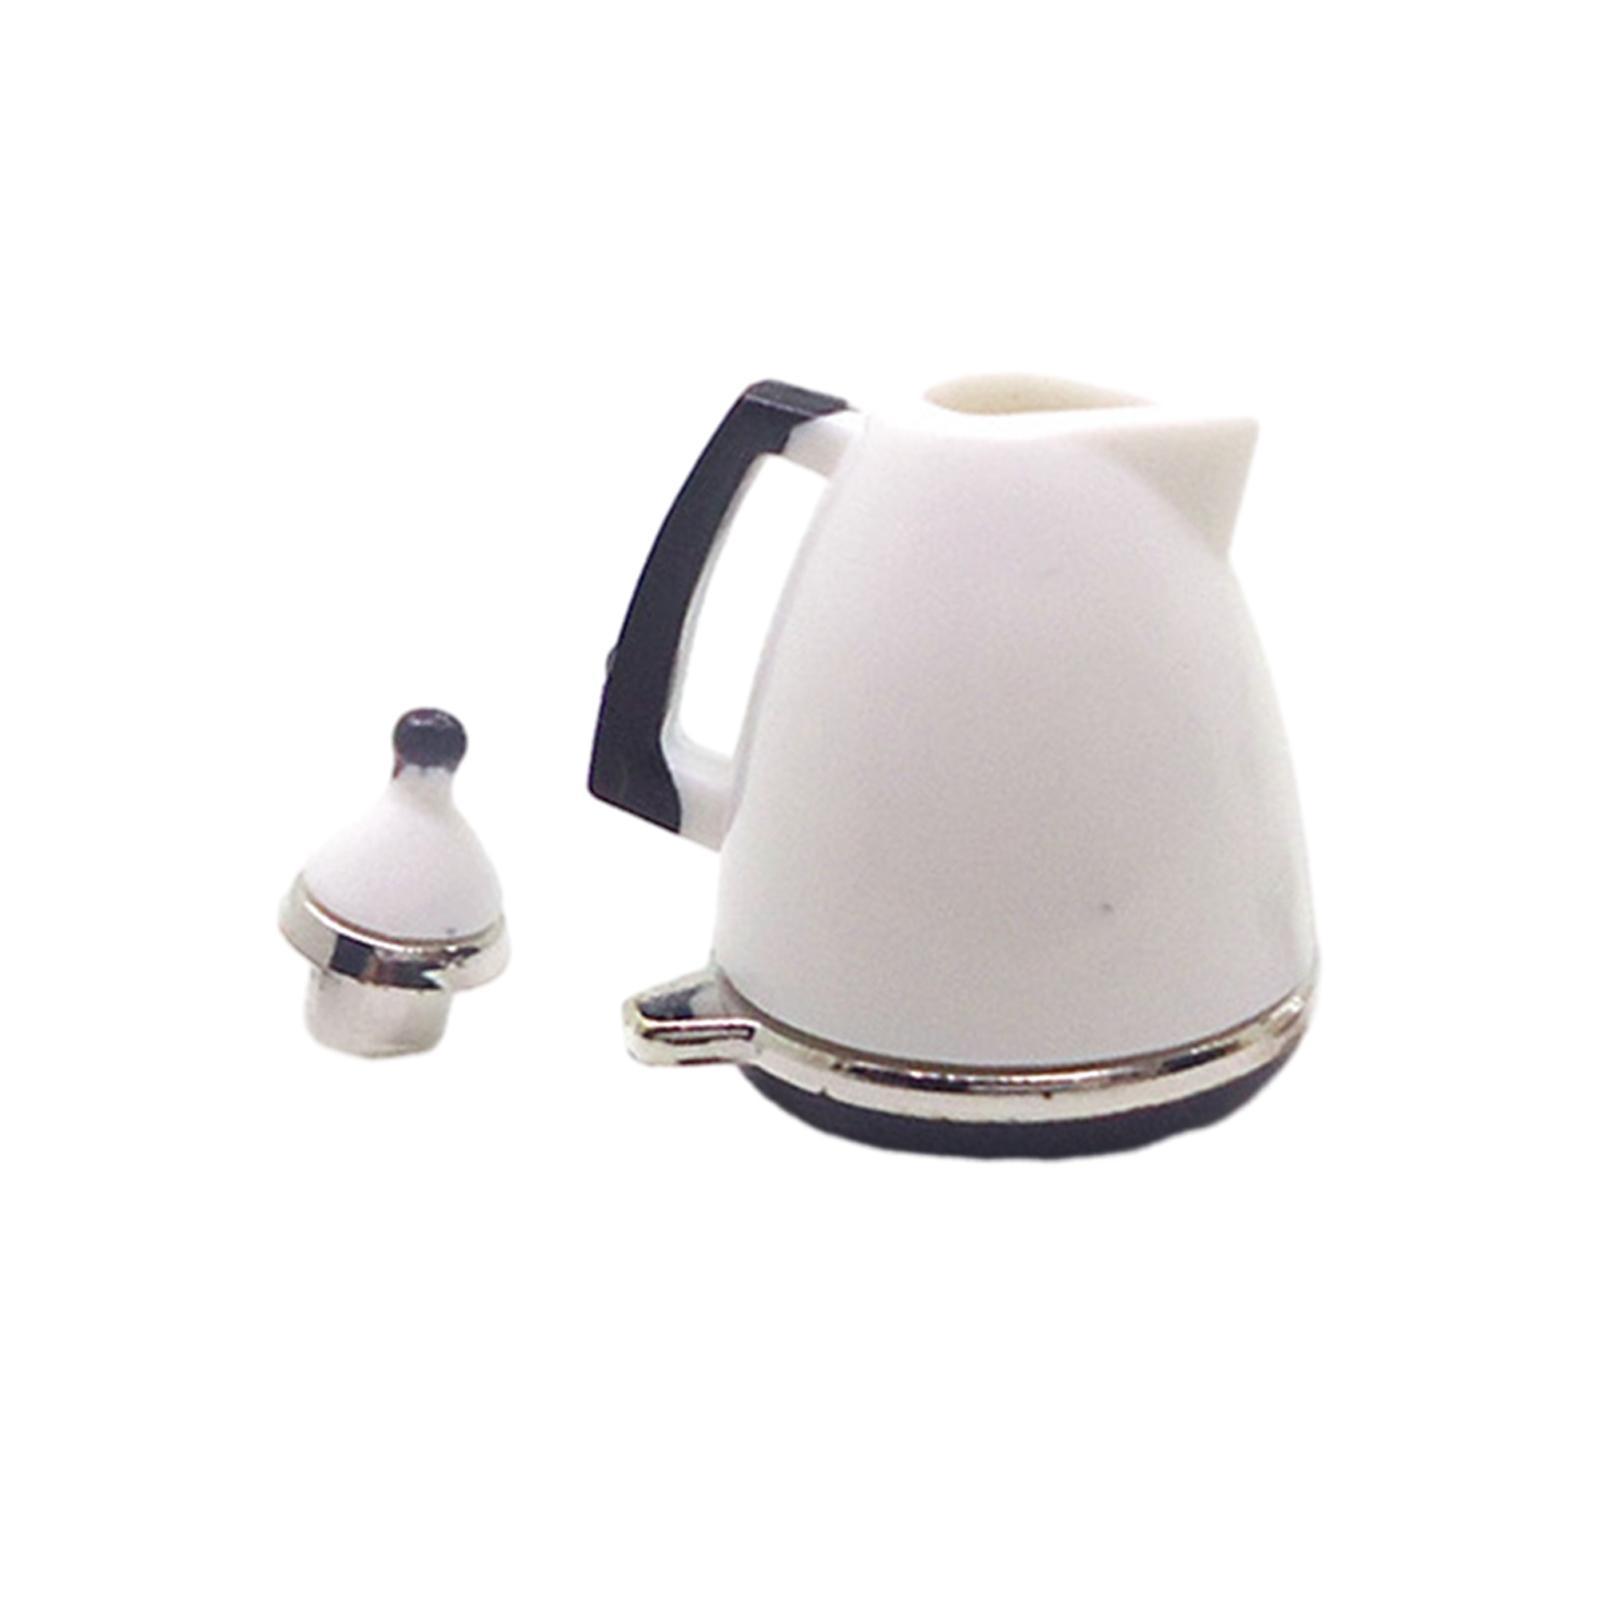 Dollhouse Miniature Kettle Mini Teapot Model for House Model Micro Landscape